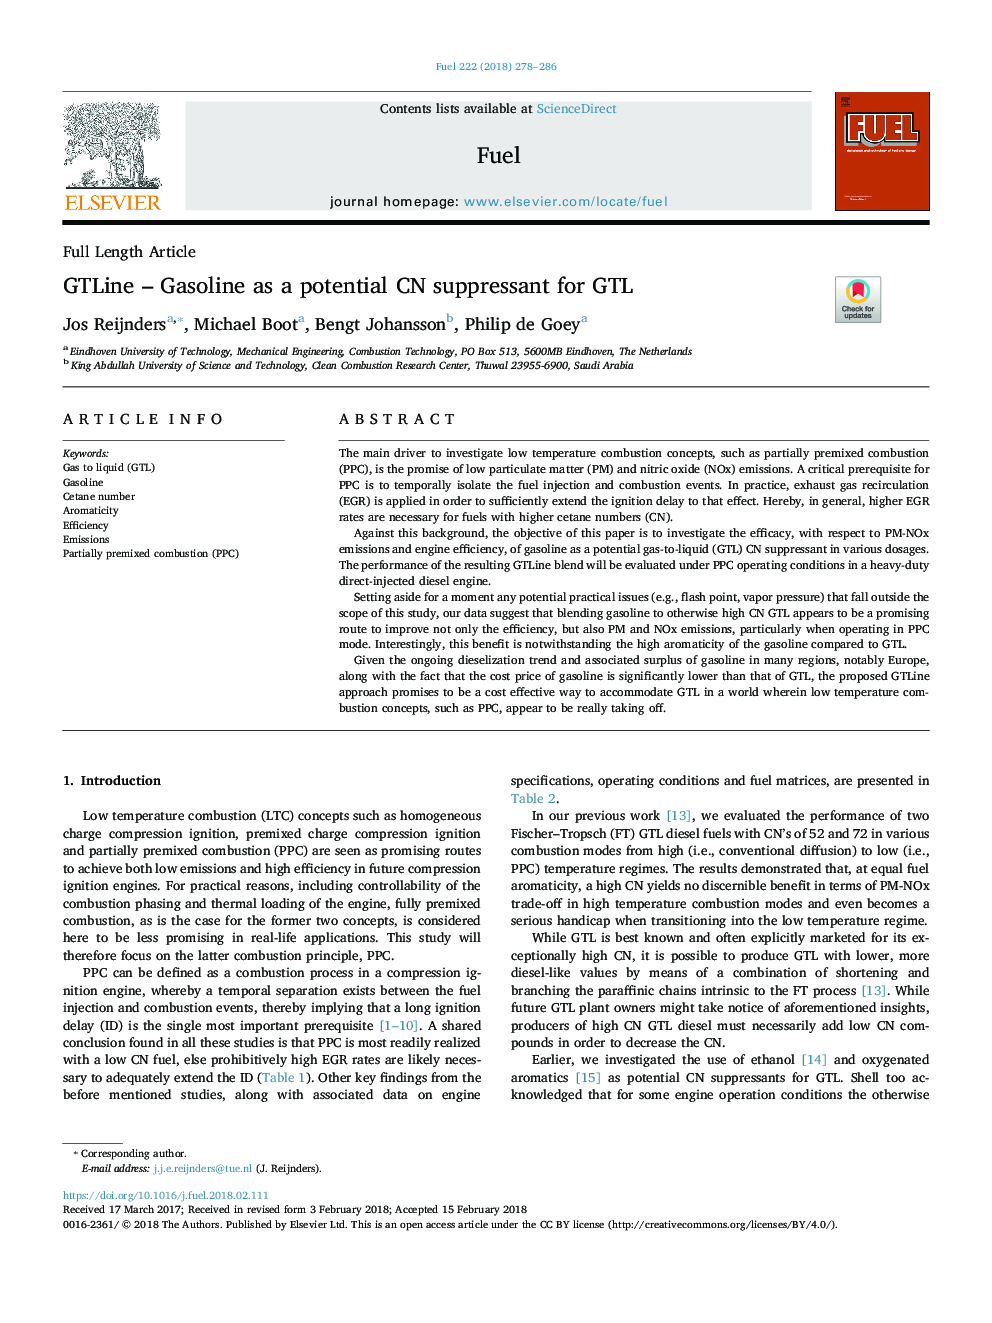 GTLine - Gasoline as a potential CN suppressant for GTL